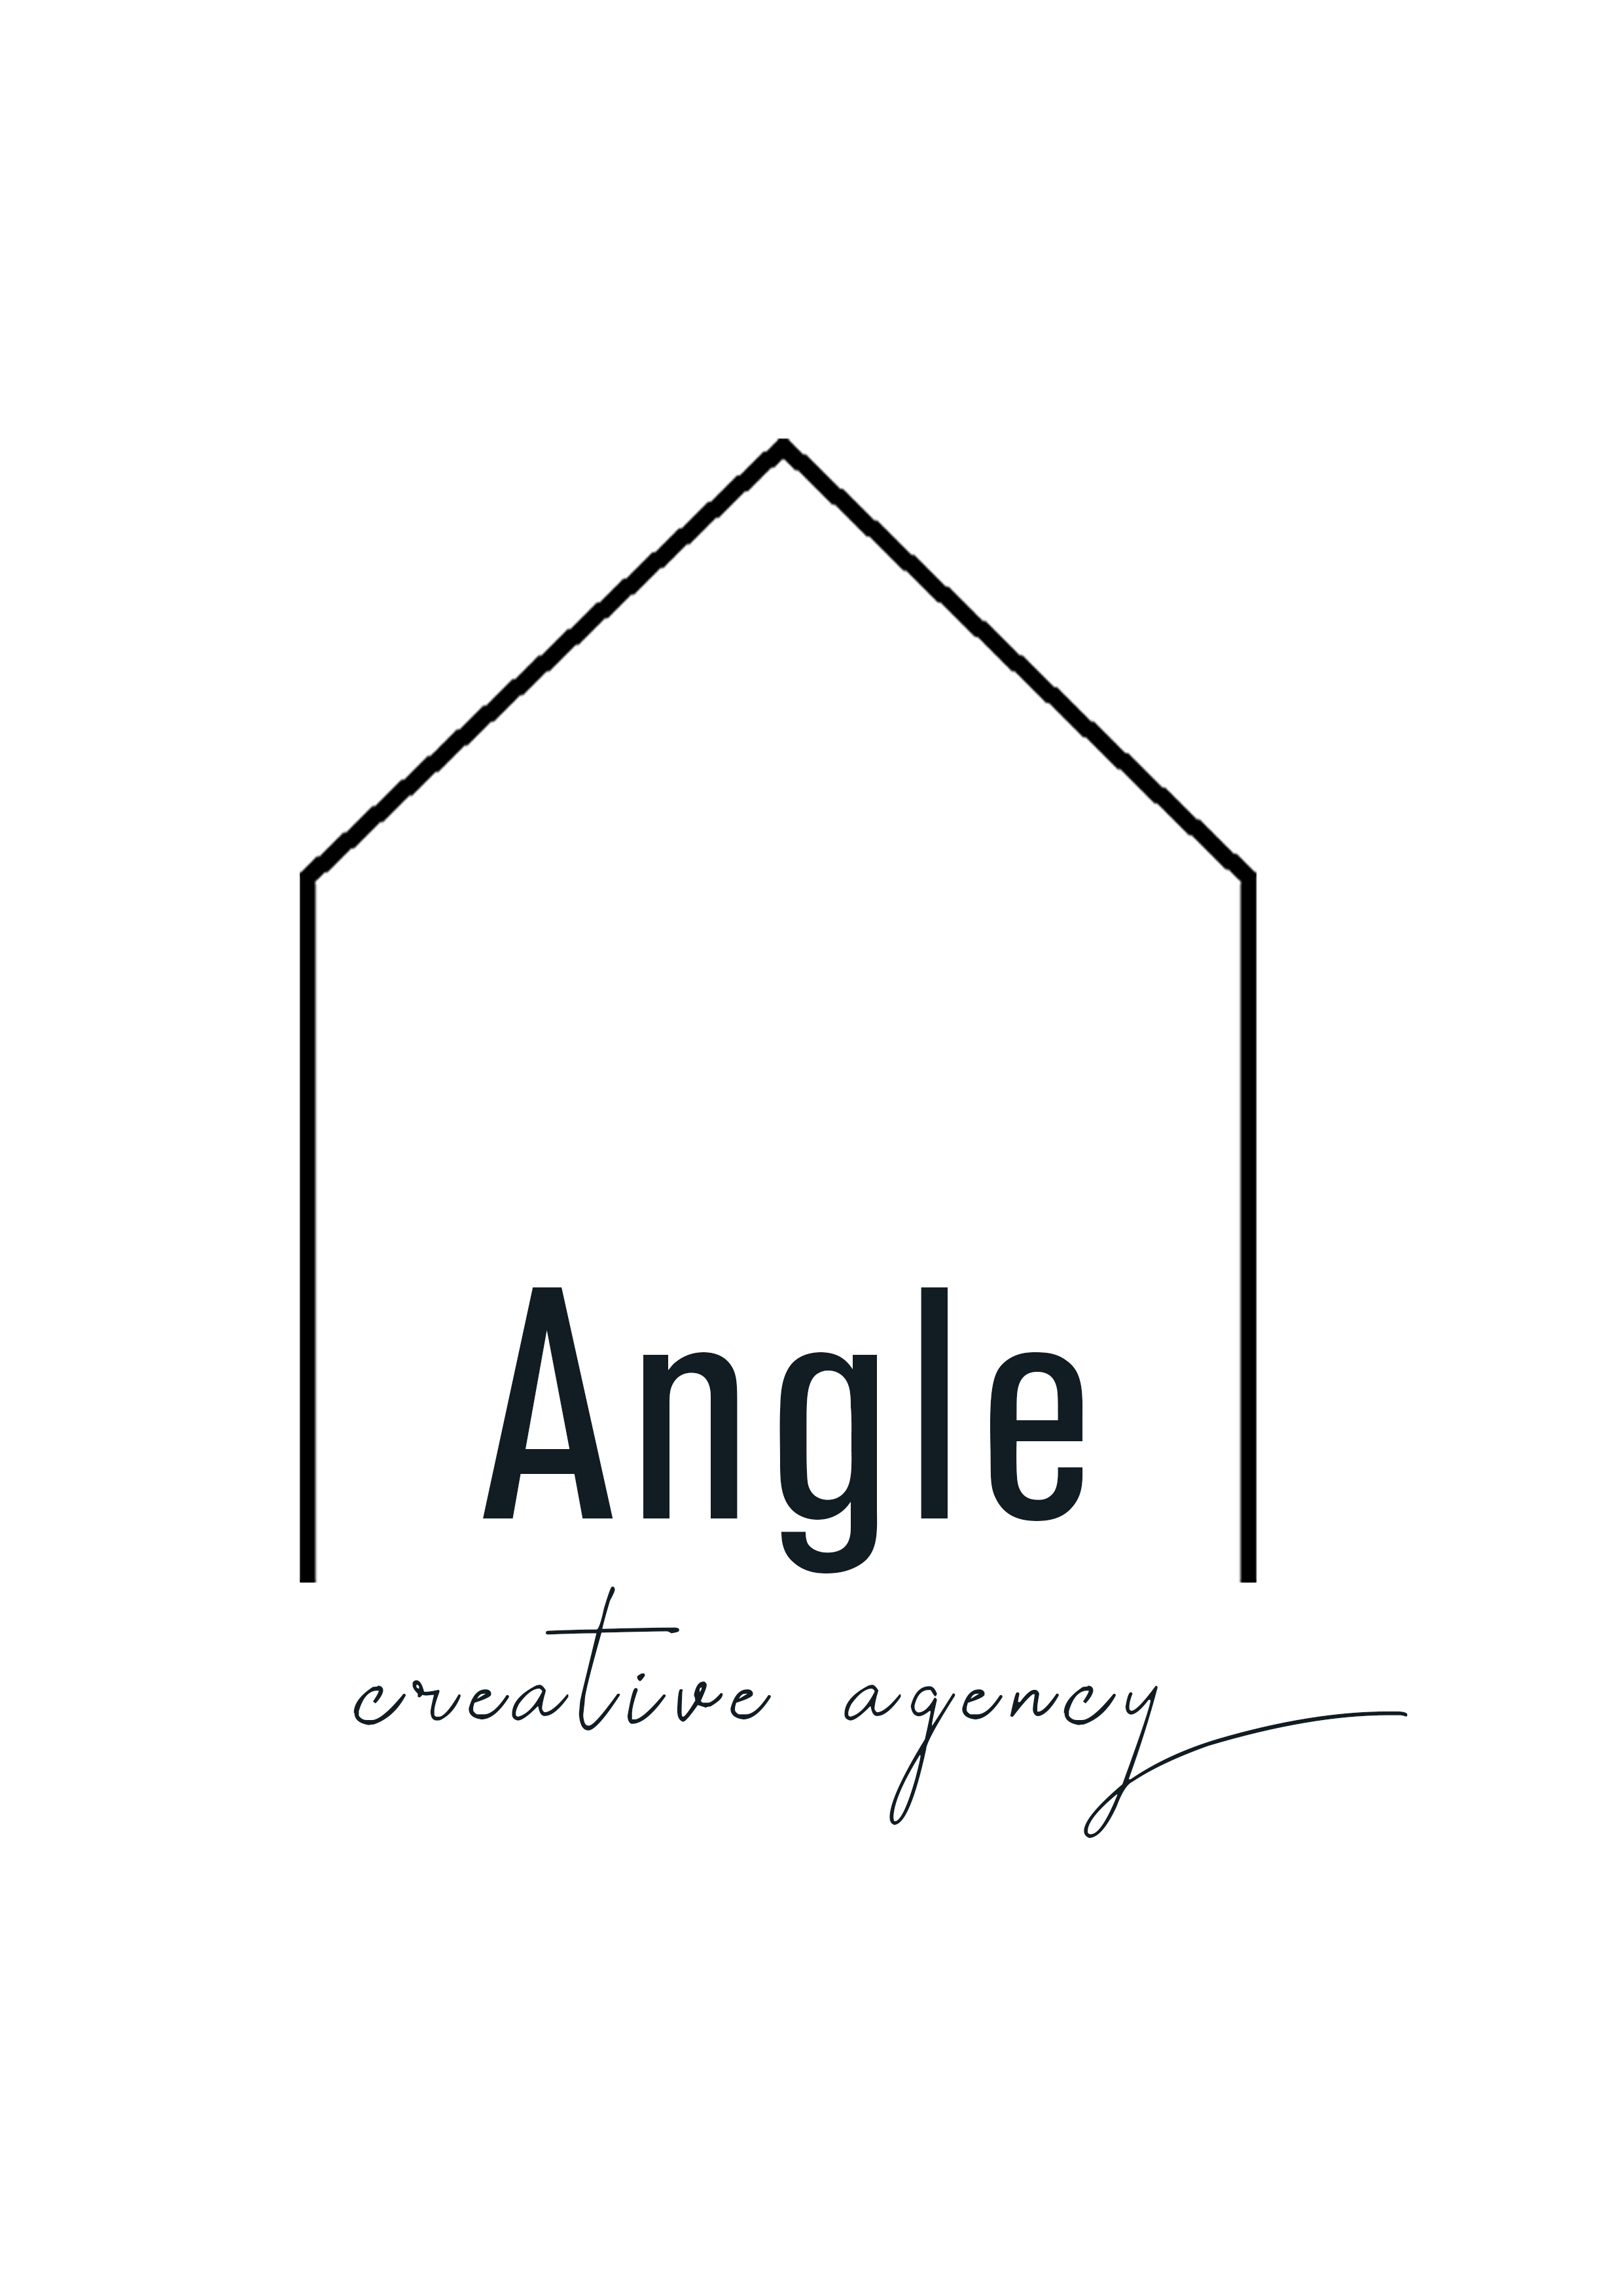 Angle Creative Agency